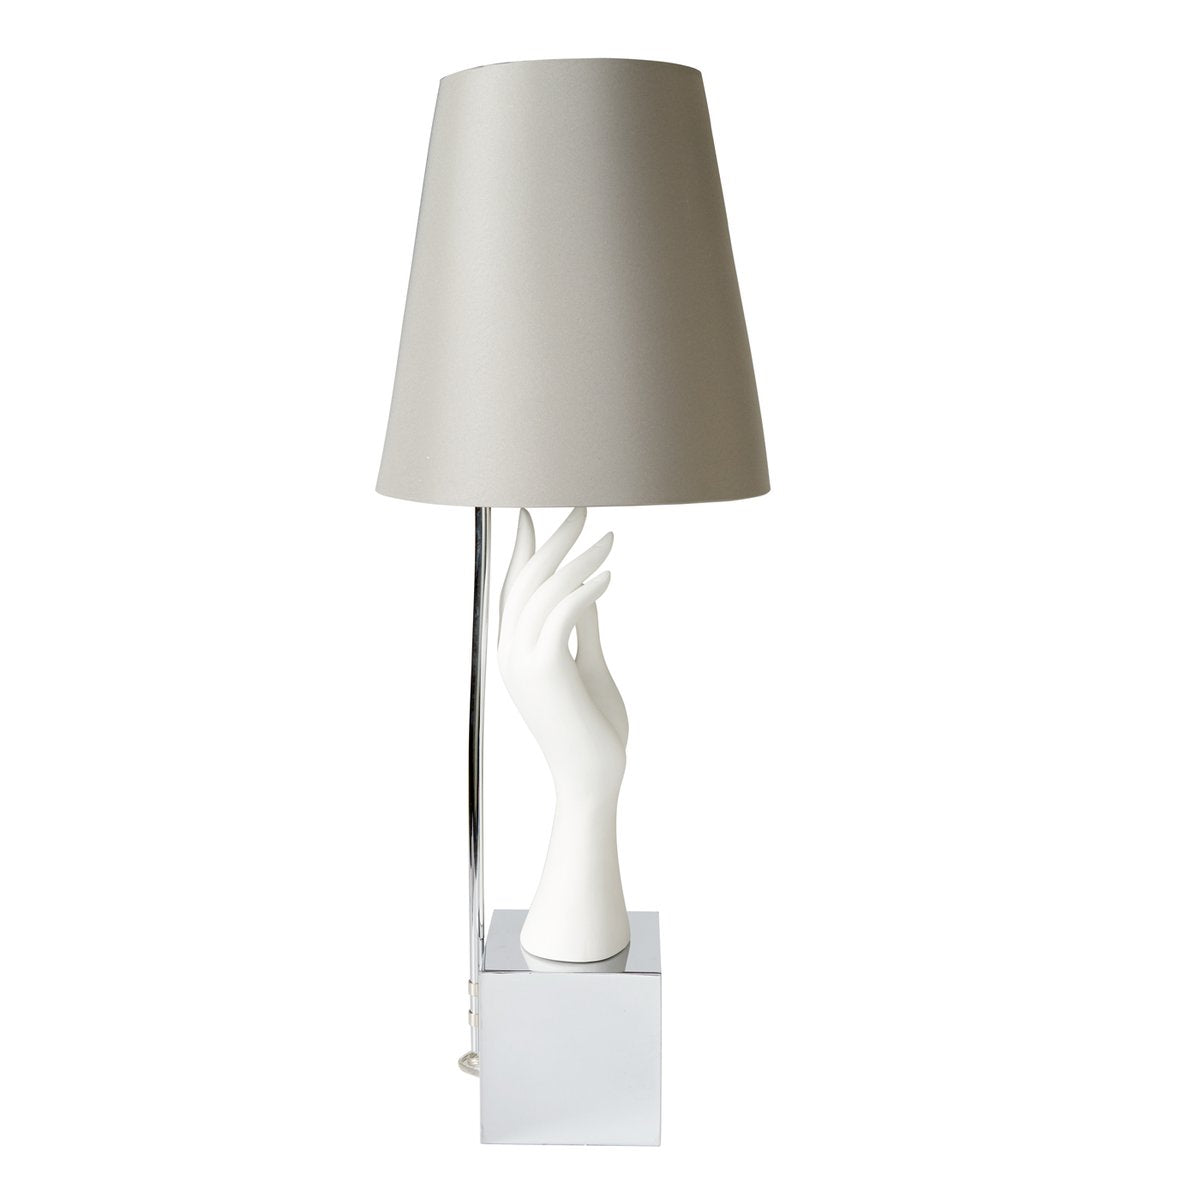 Eve Table Lamp by Jonathan Adler